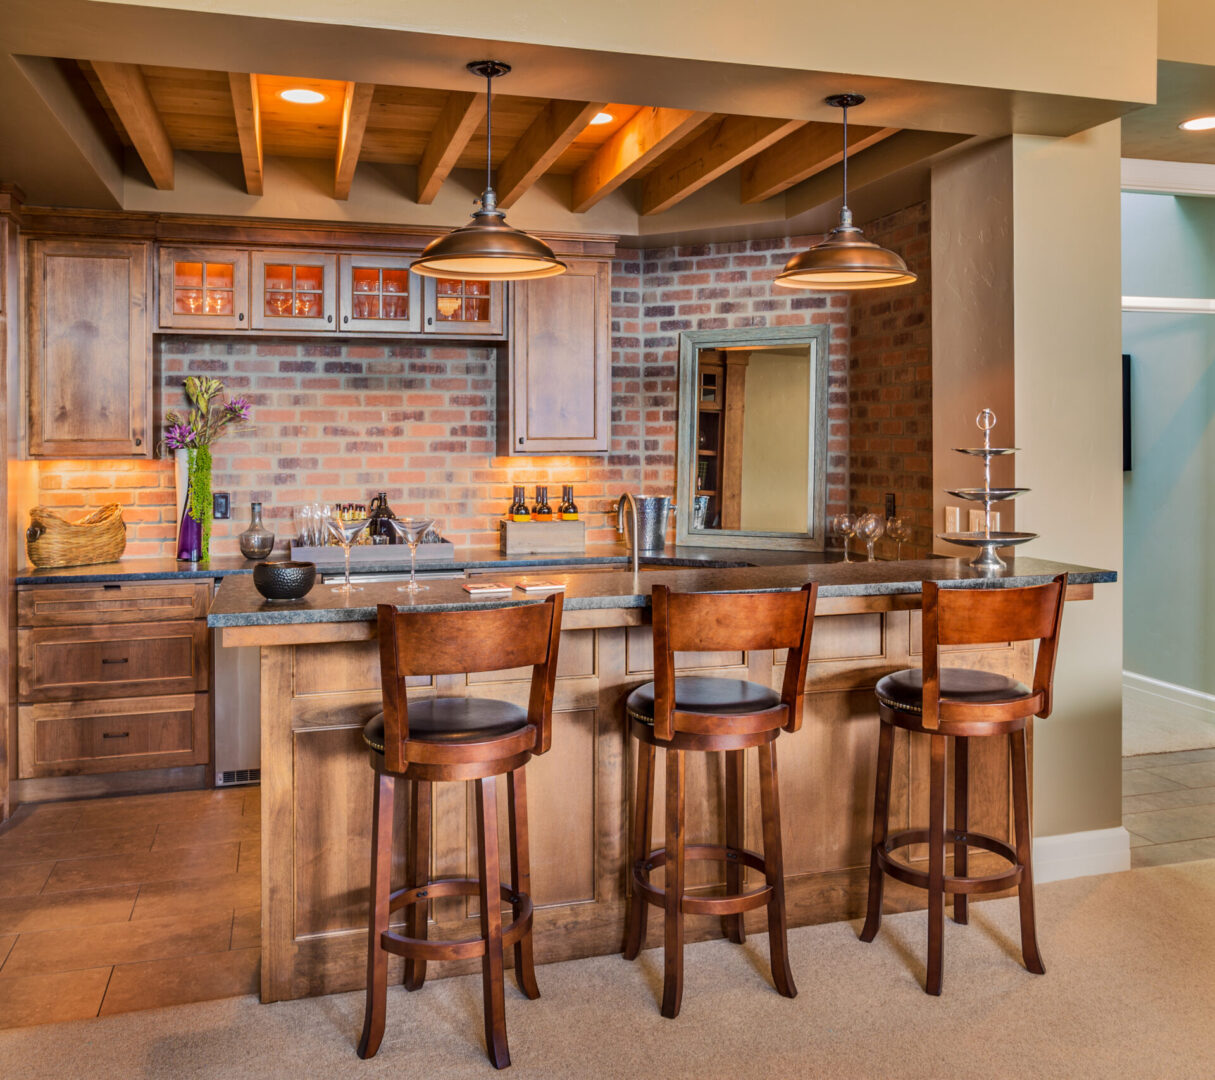 A kitchen with three bar stools and a brick wall.